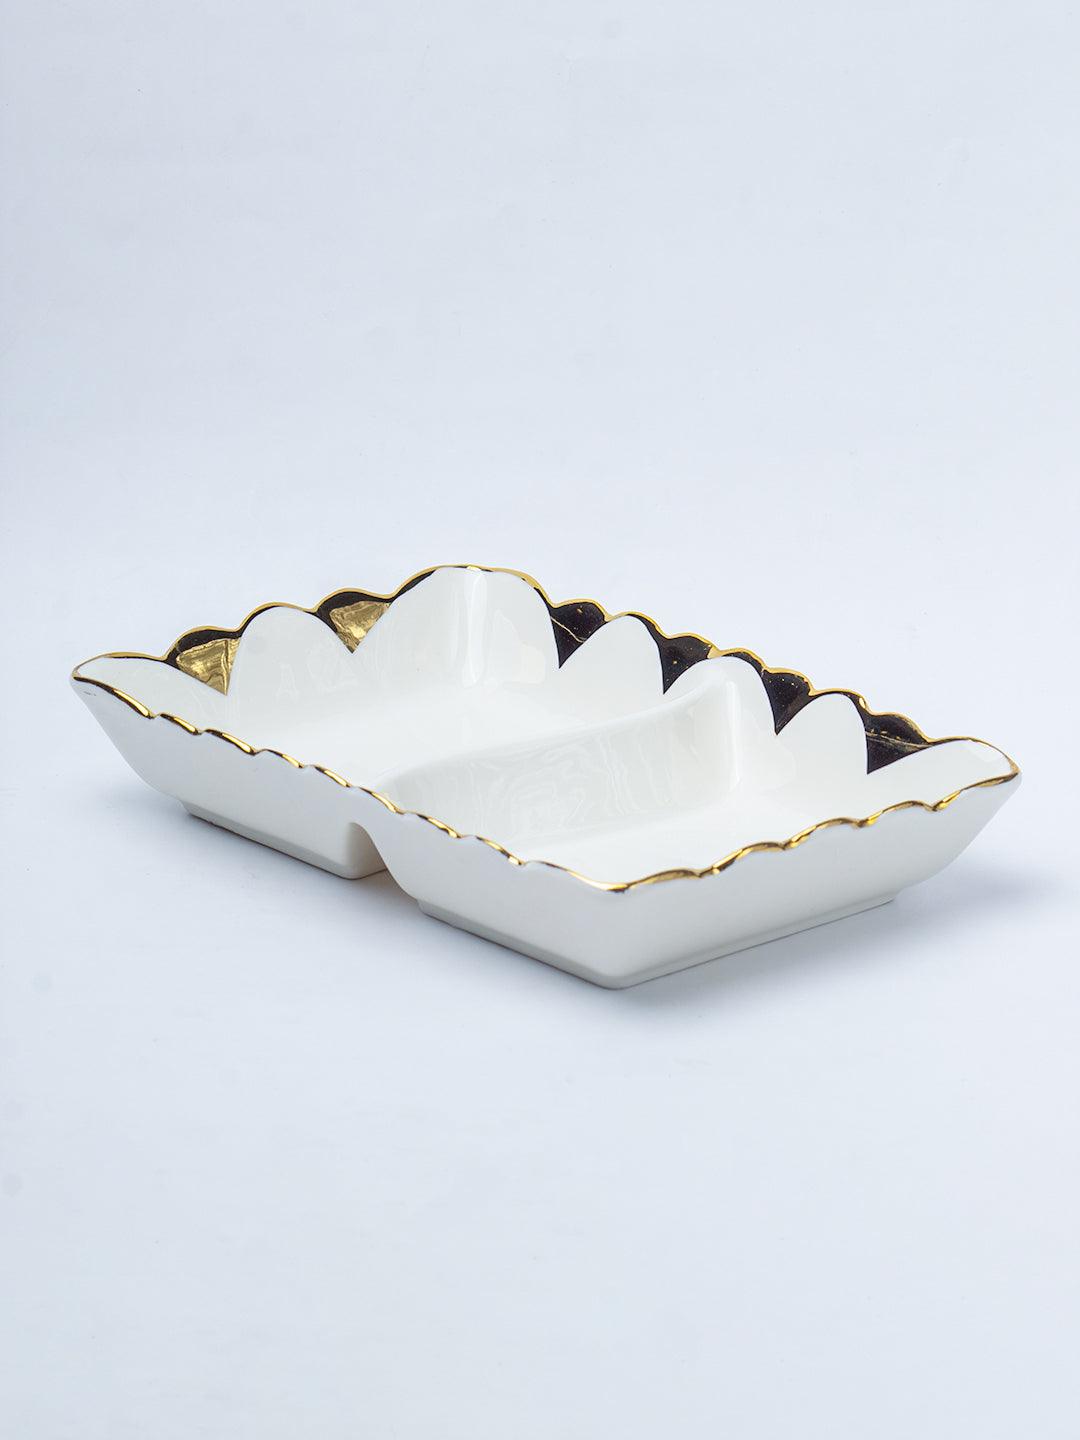 Antique Off White Ceramic Divided Serving Dish - 21 x 14 x 6CM - 4